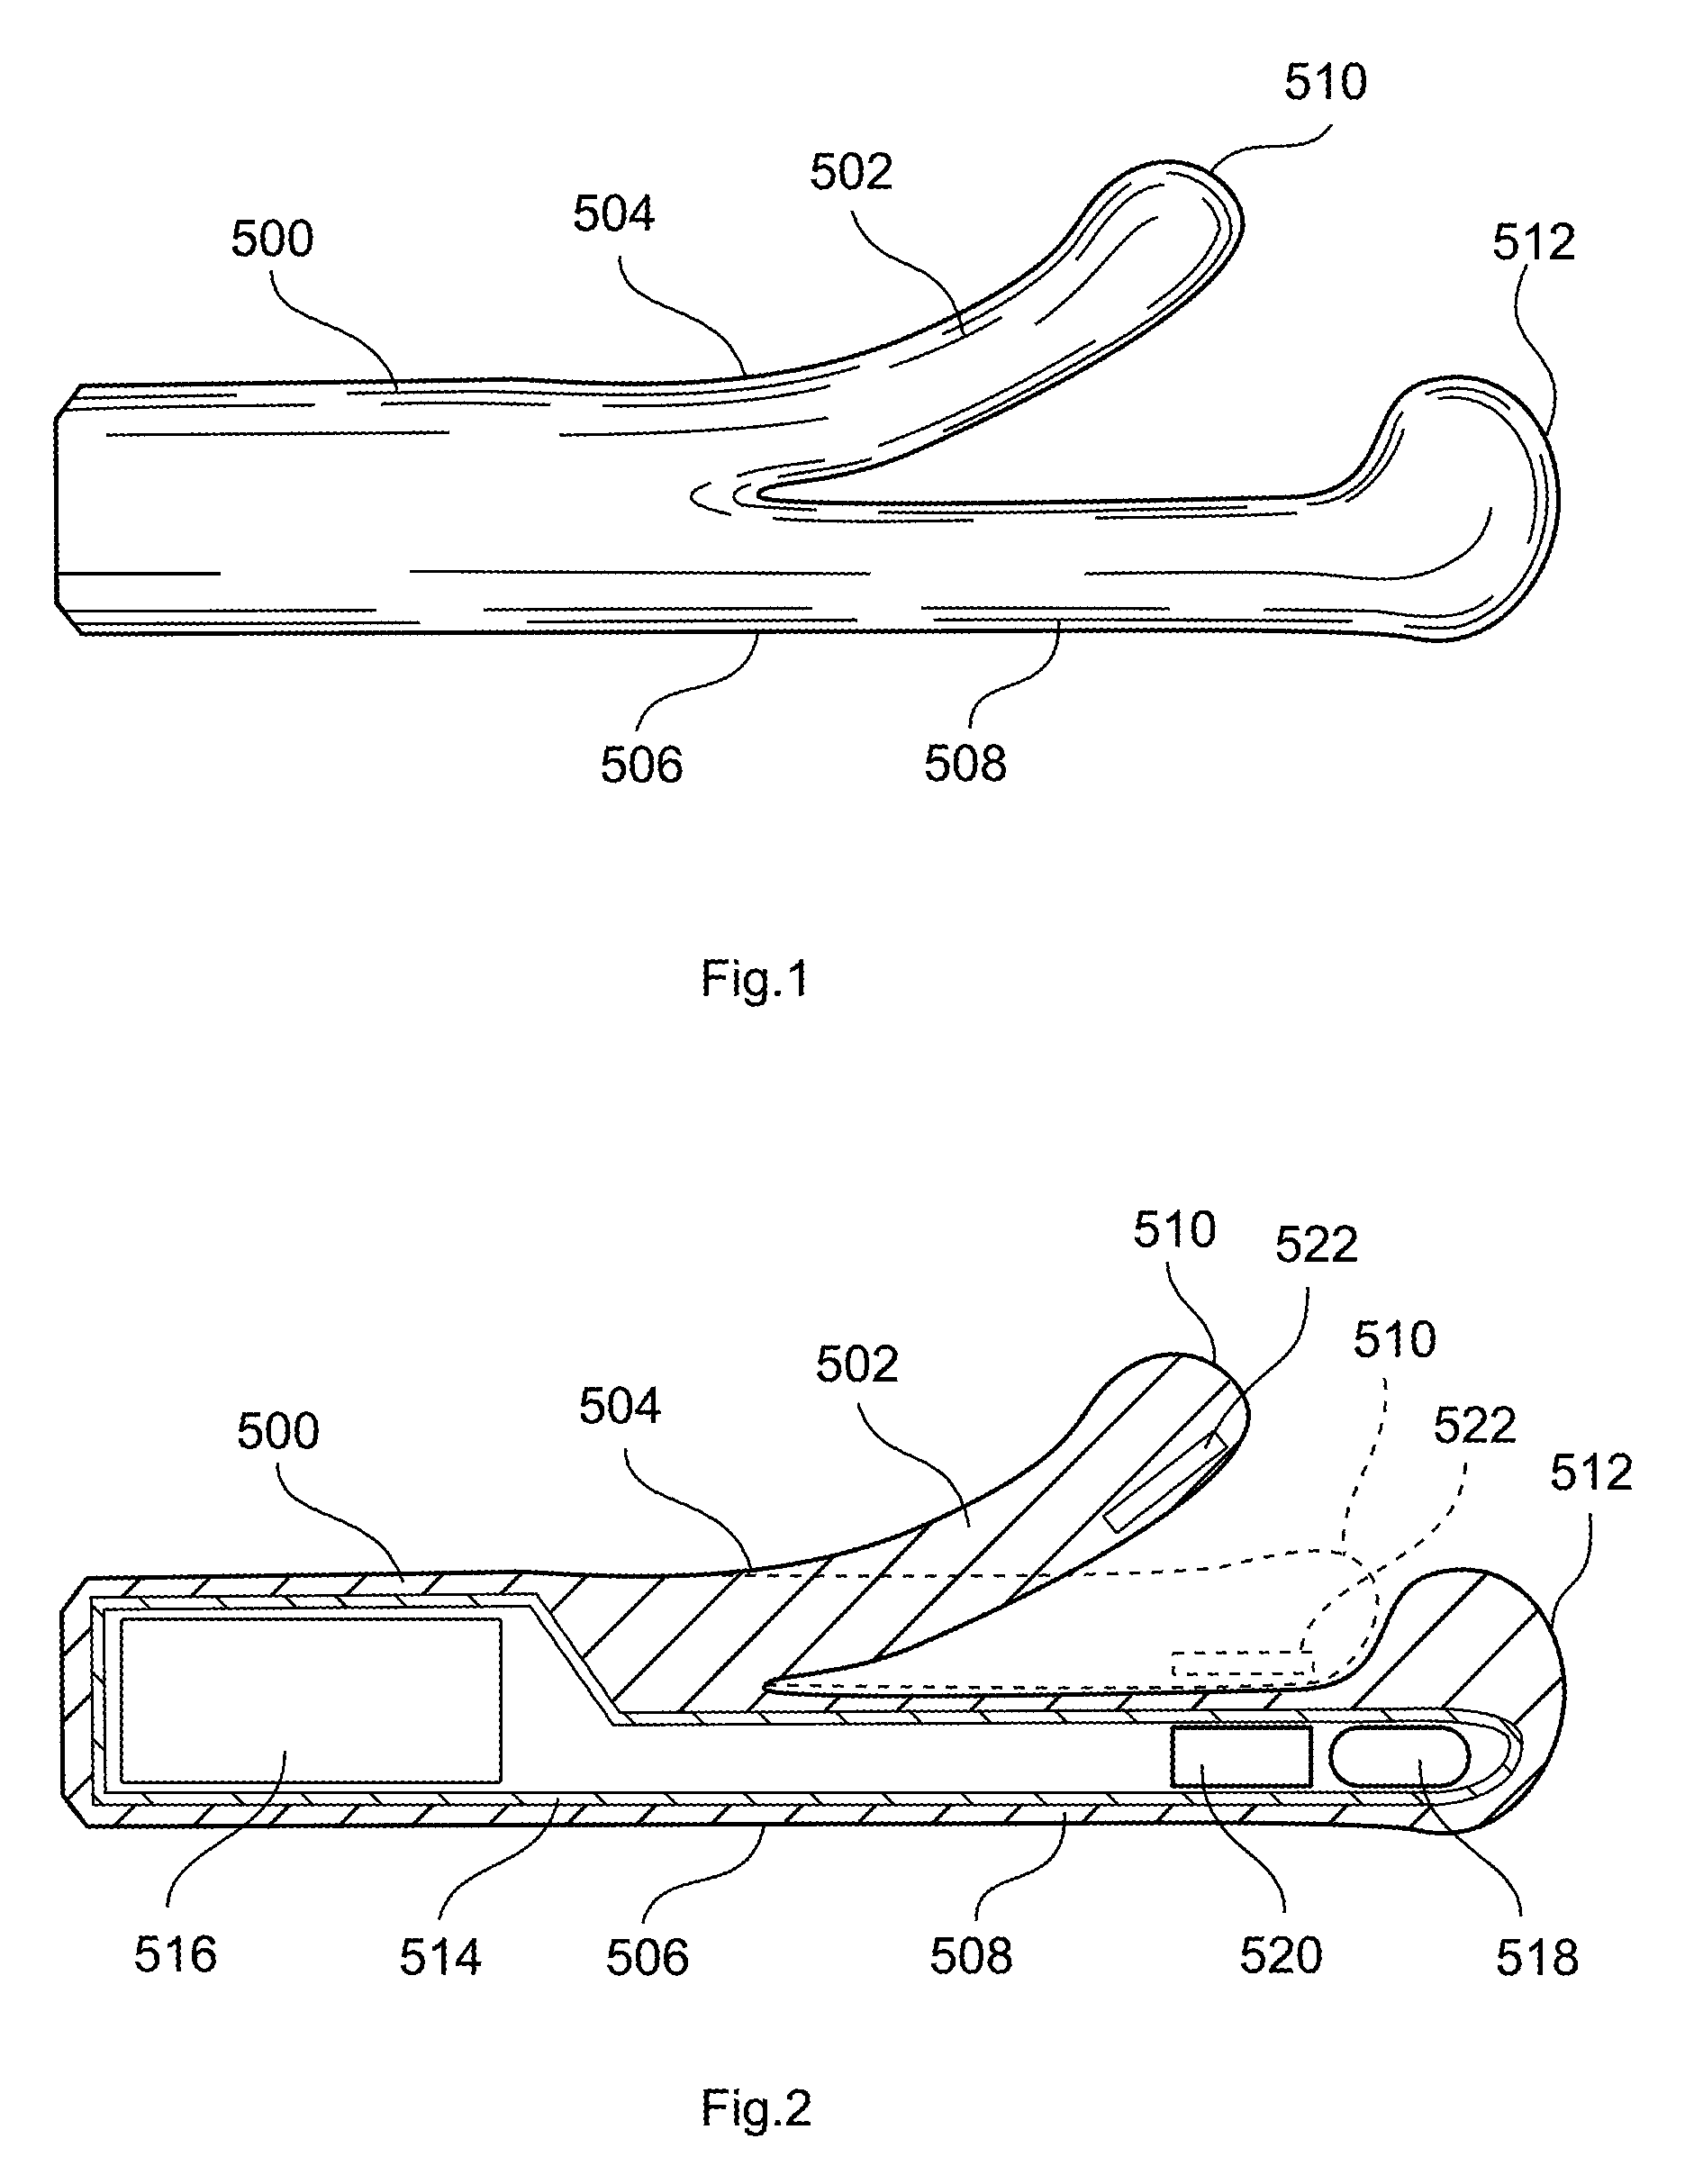 Stimulator with flexible elements (variant embodiments)